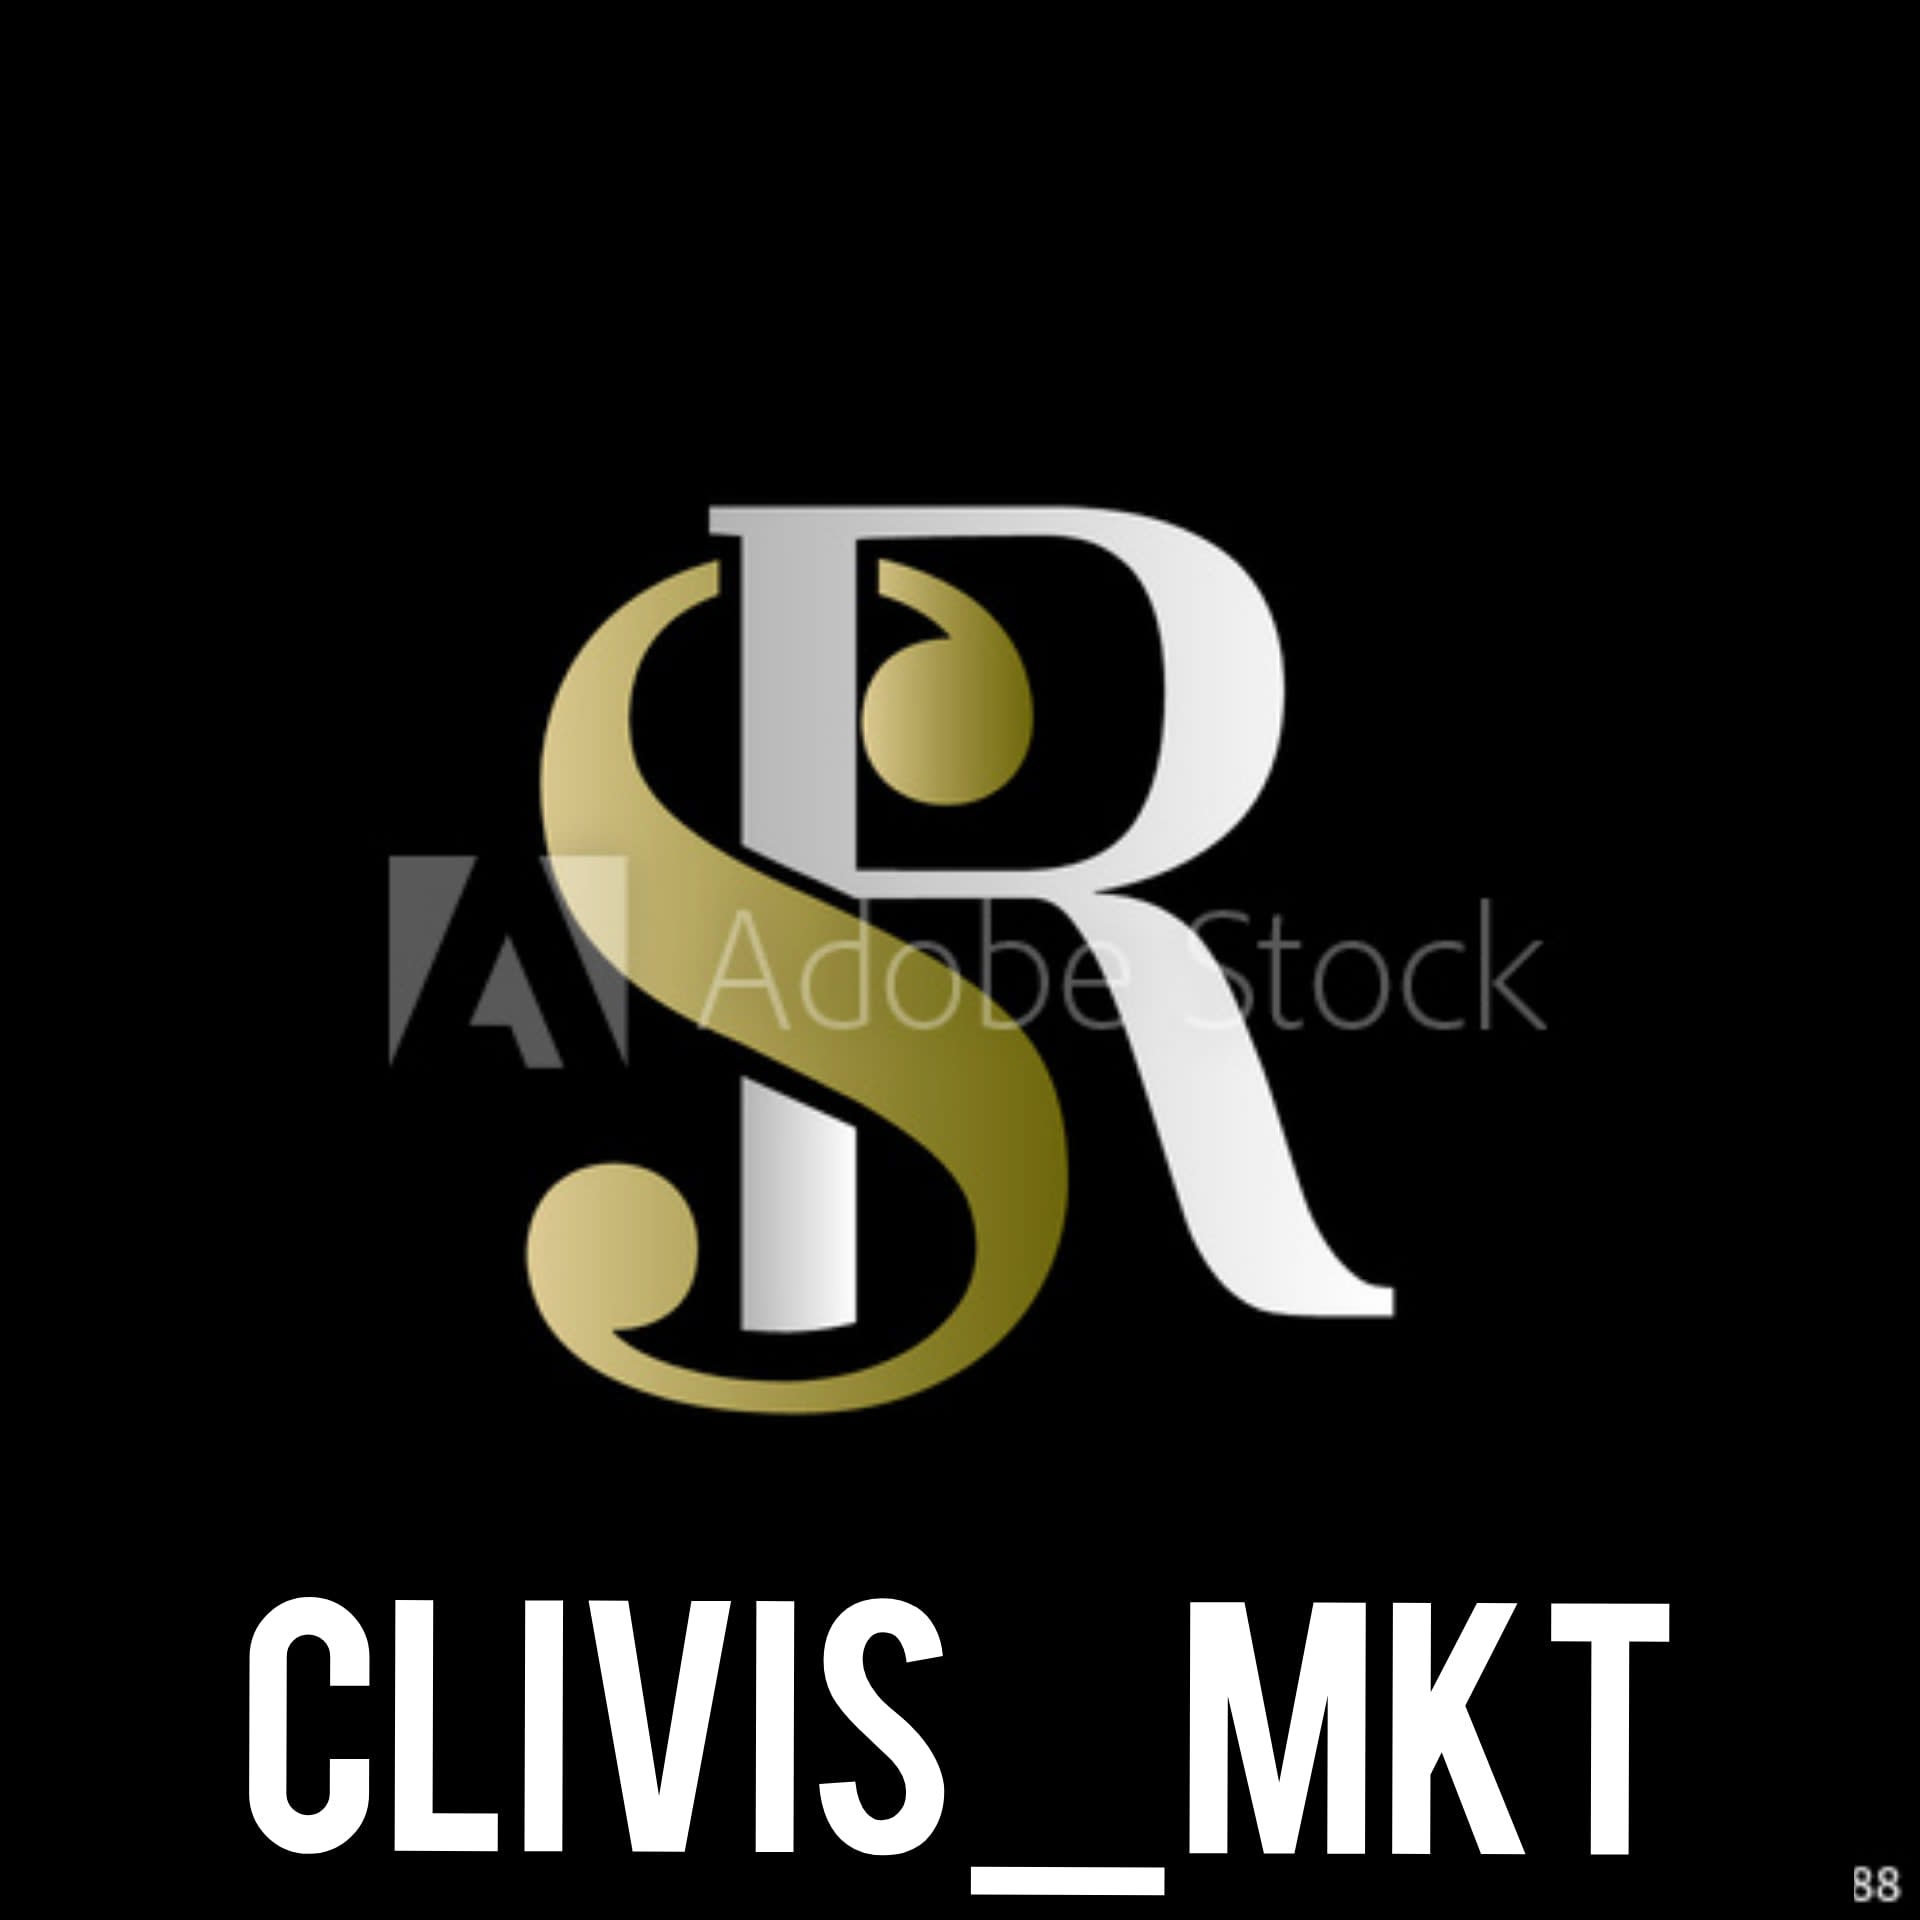 Sr Clivis Marketing